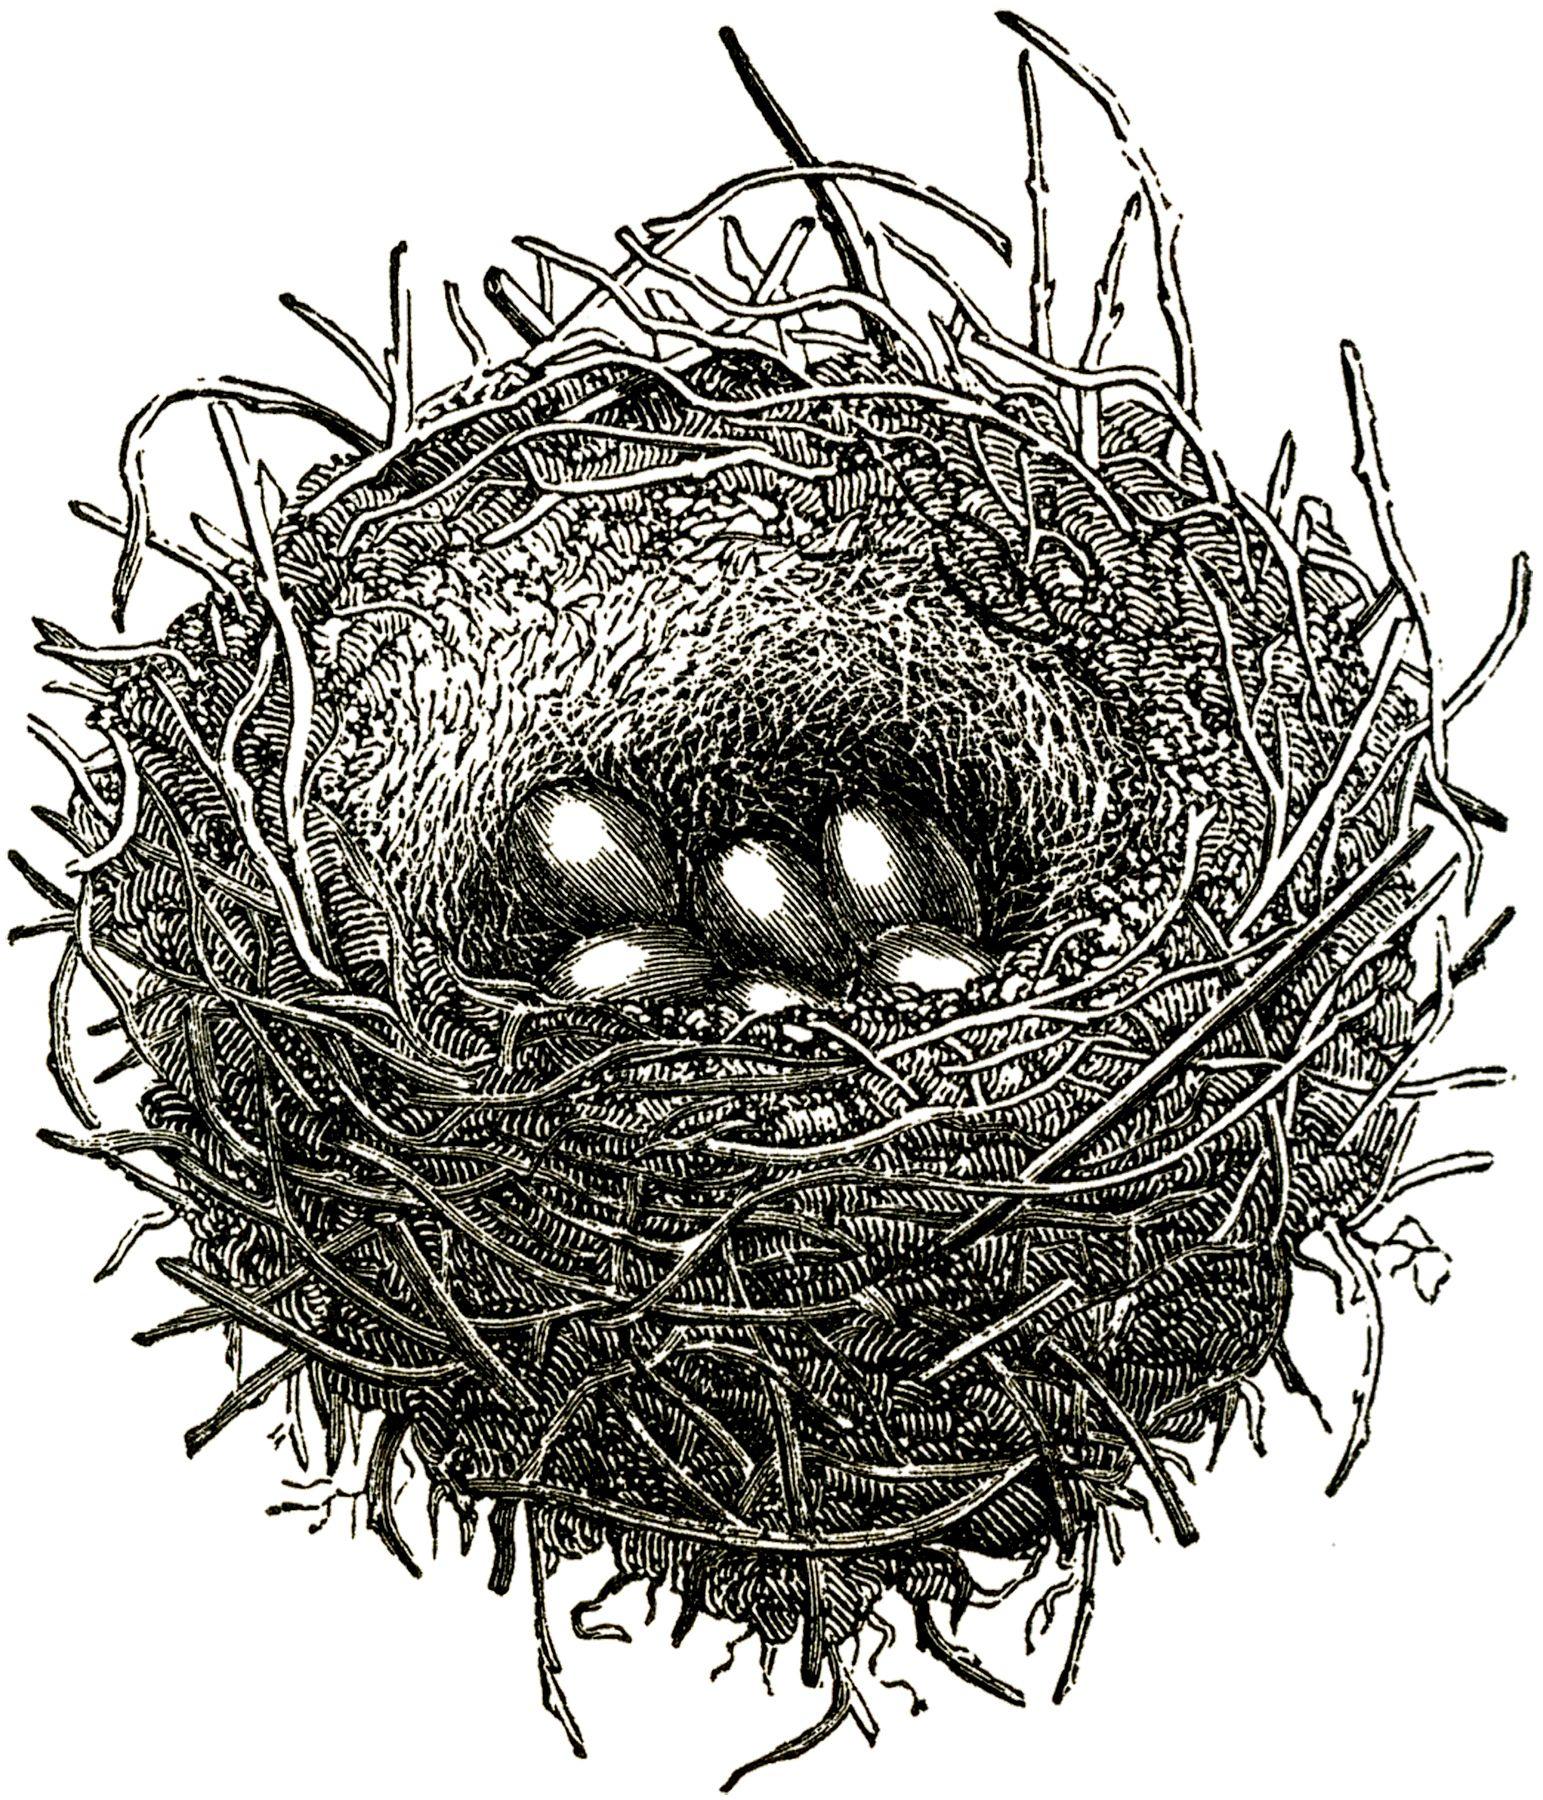 Birdsnest Black and White Logo - Sweet Public Domain Bird Nest Image! - The Graphics Fairy